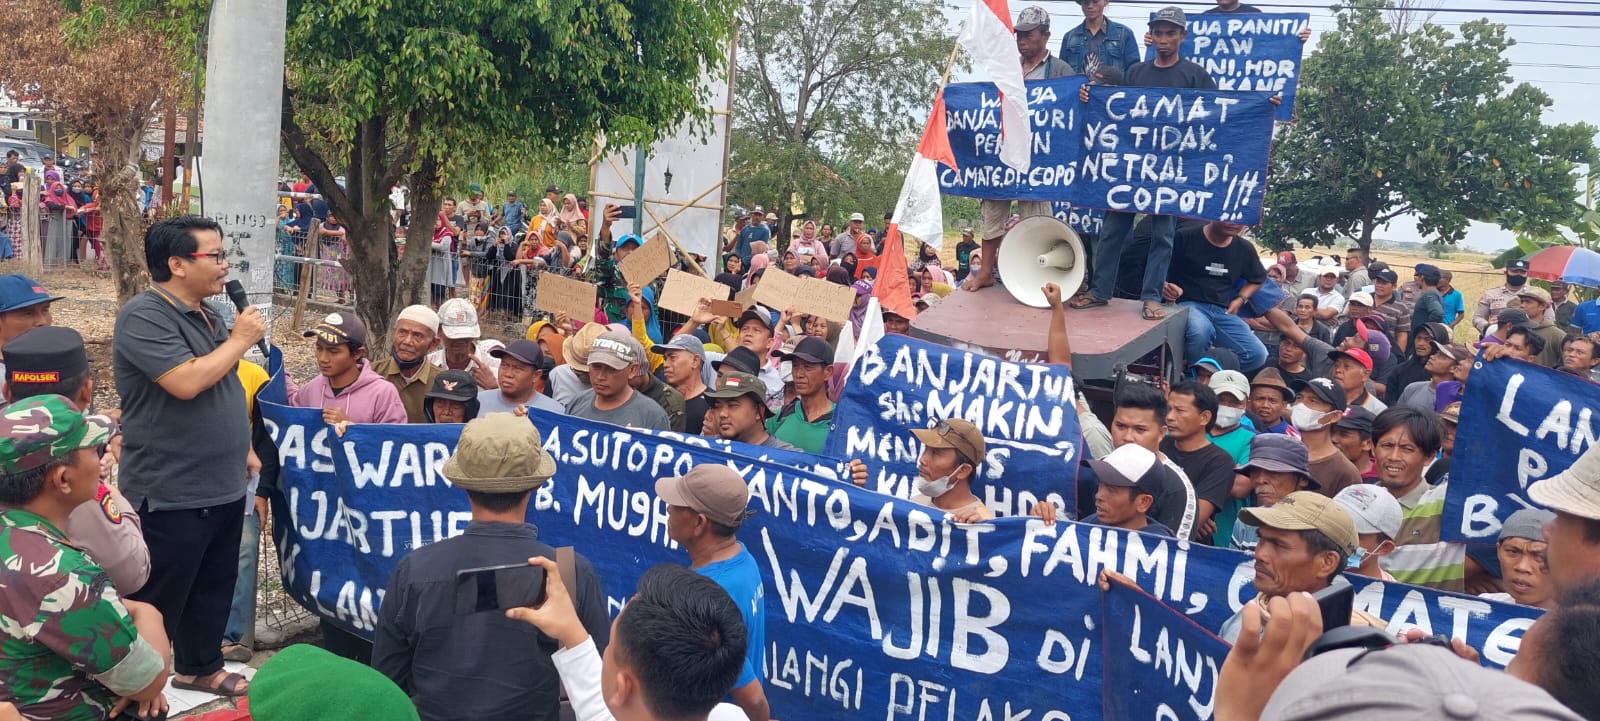 Pilkades PAW Banjarturi Kabupaten Tegal Mencekam, Ratusan Massa Demo di Balai Desa